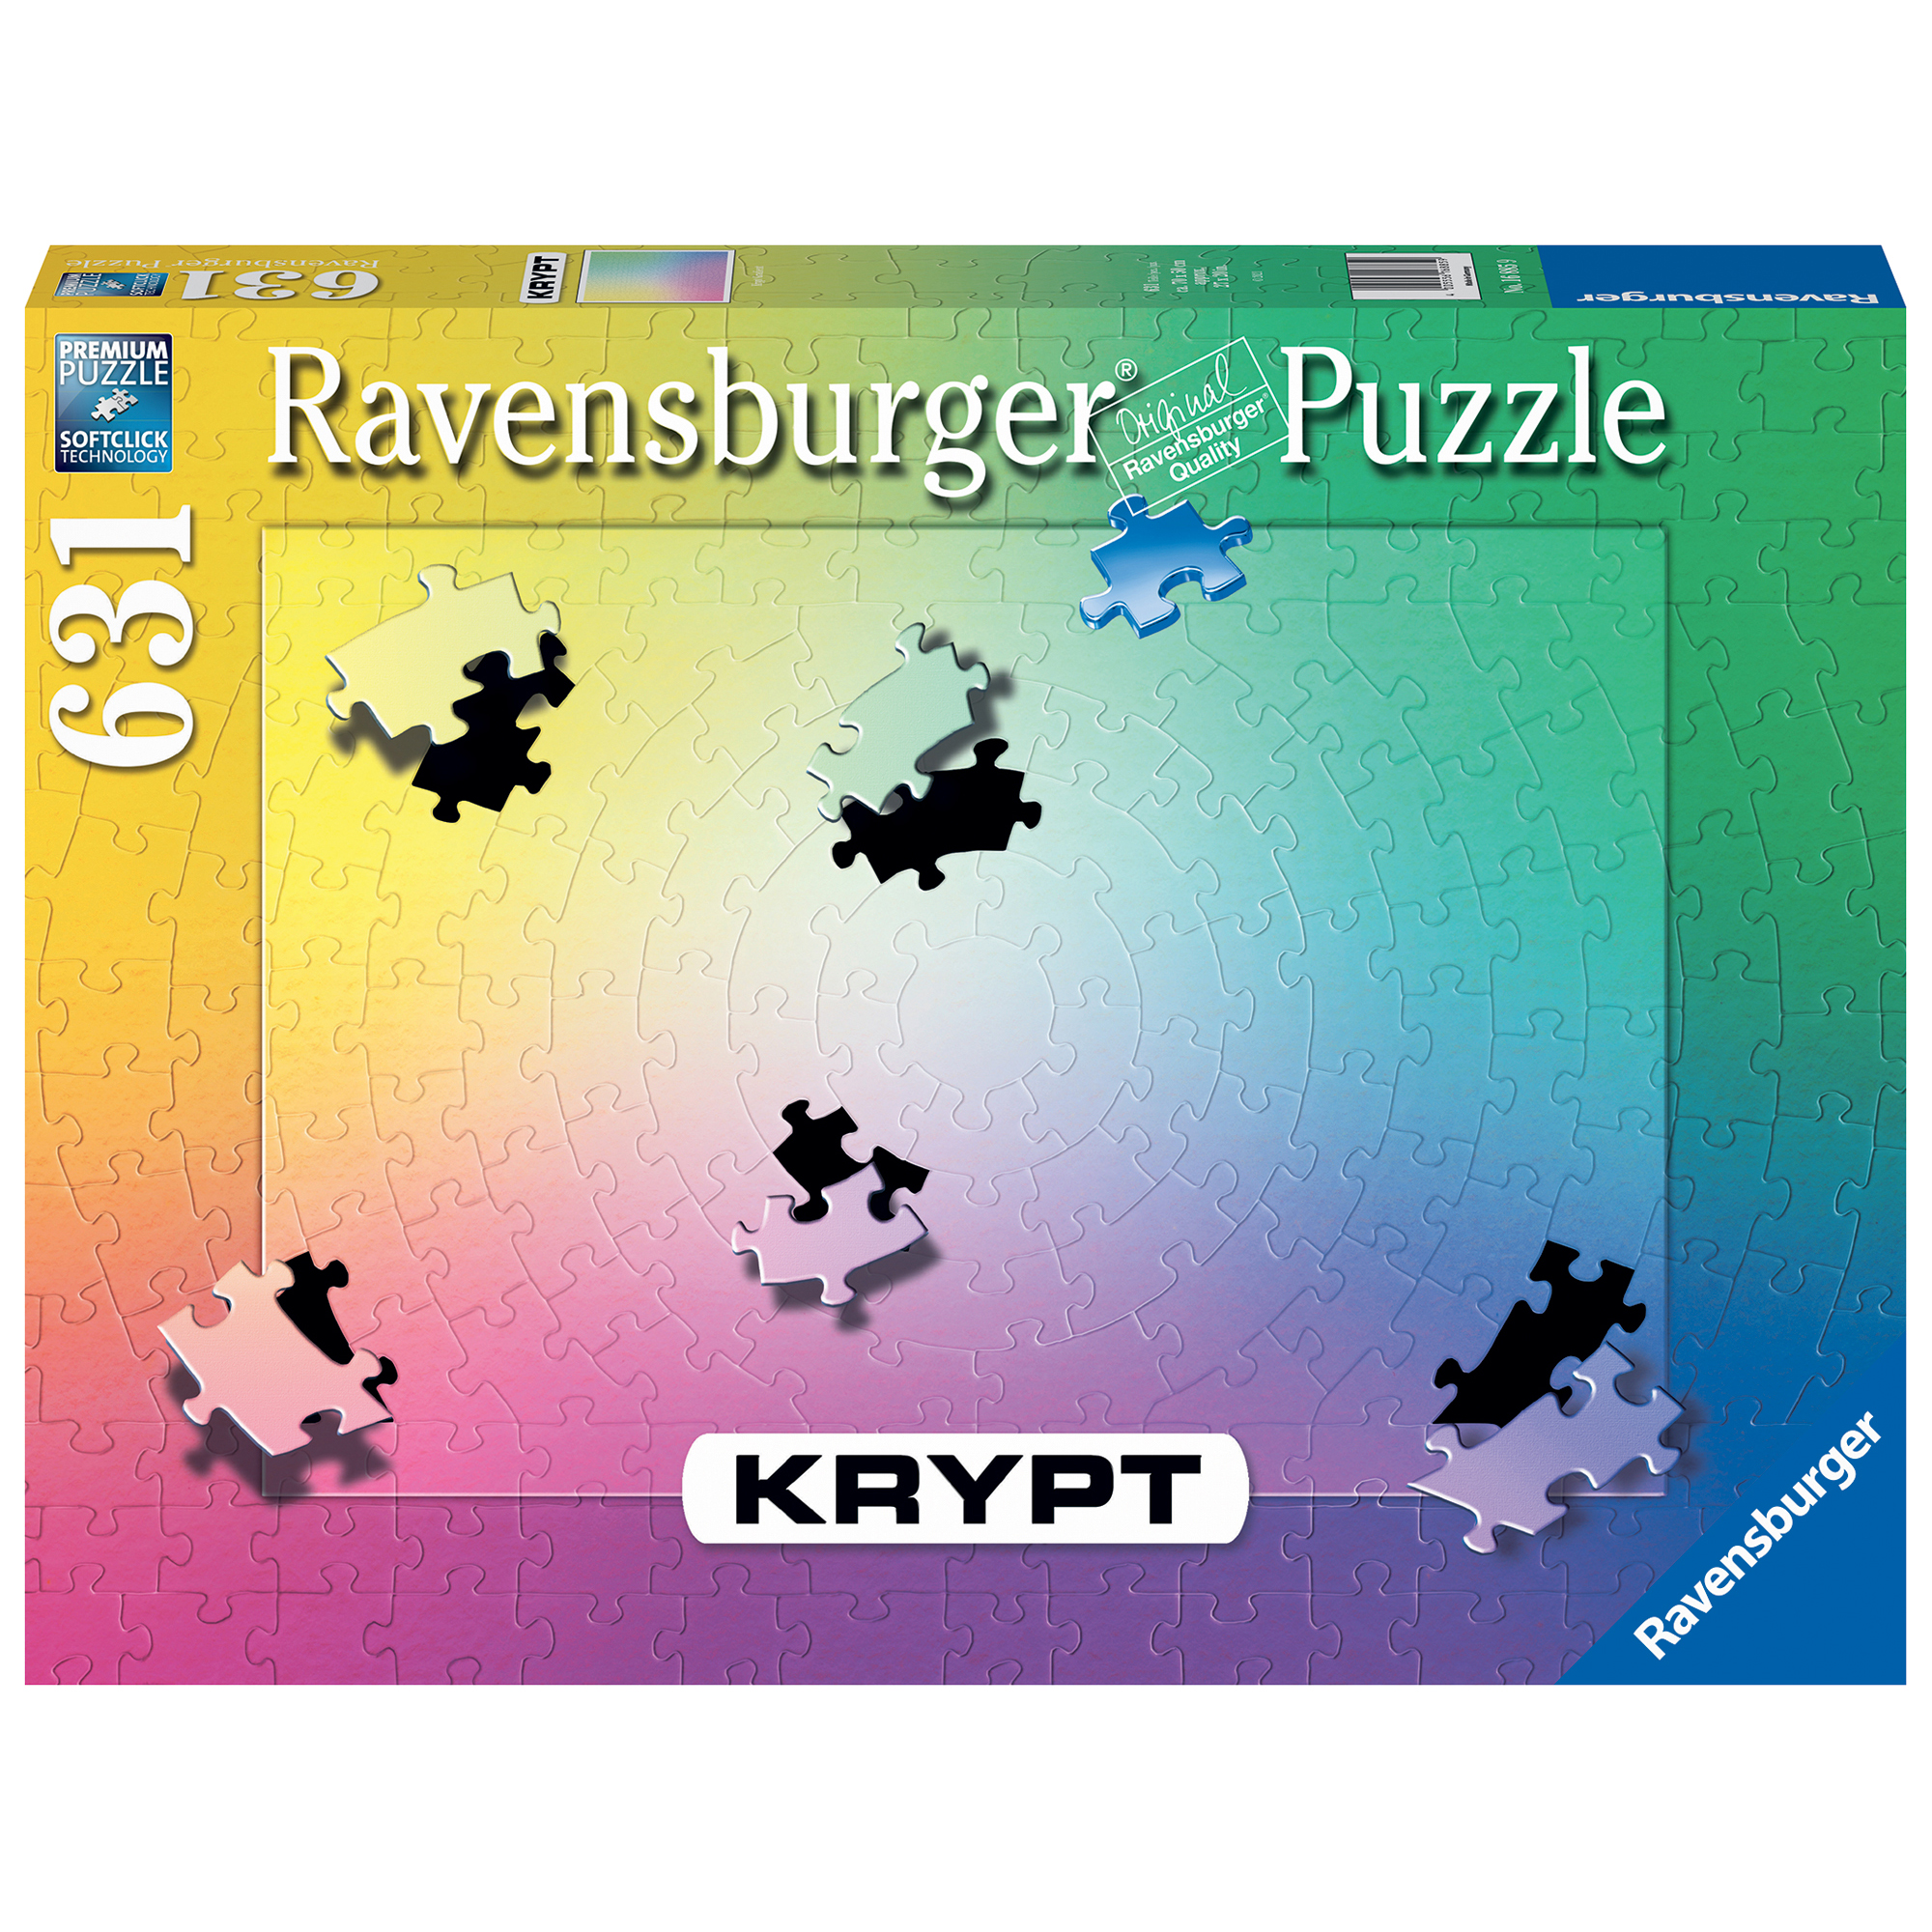 Ravensburger krypt puzzle gradient, 631 pezzi - Ravensburger